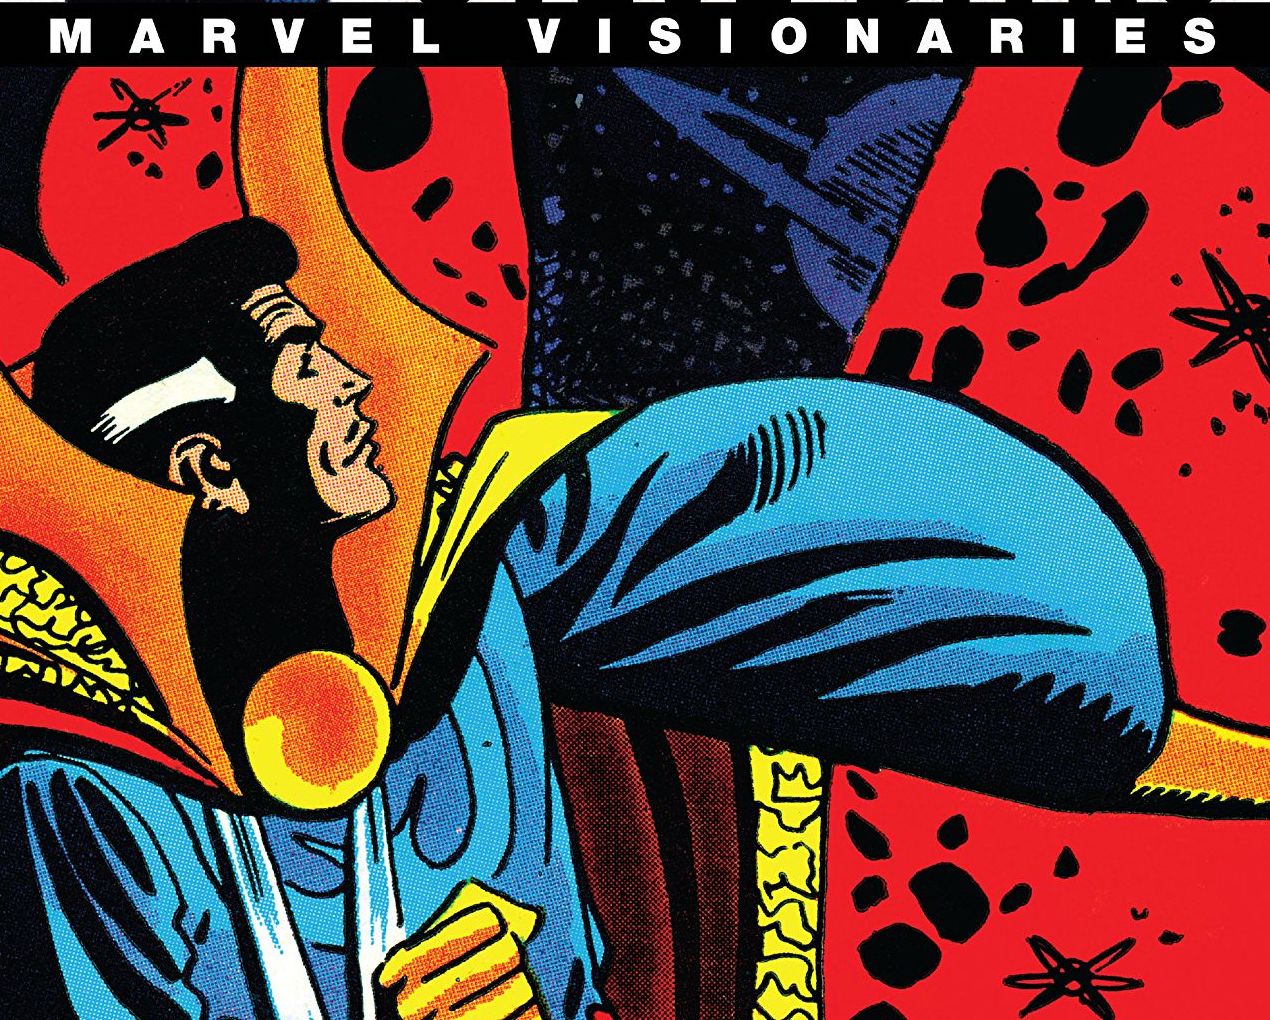 Marvel Visionaries: Steve Ditko Review